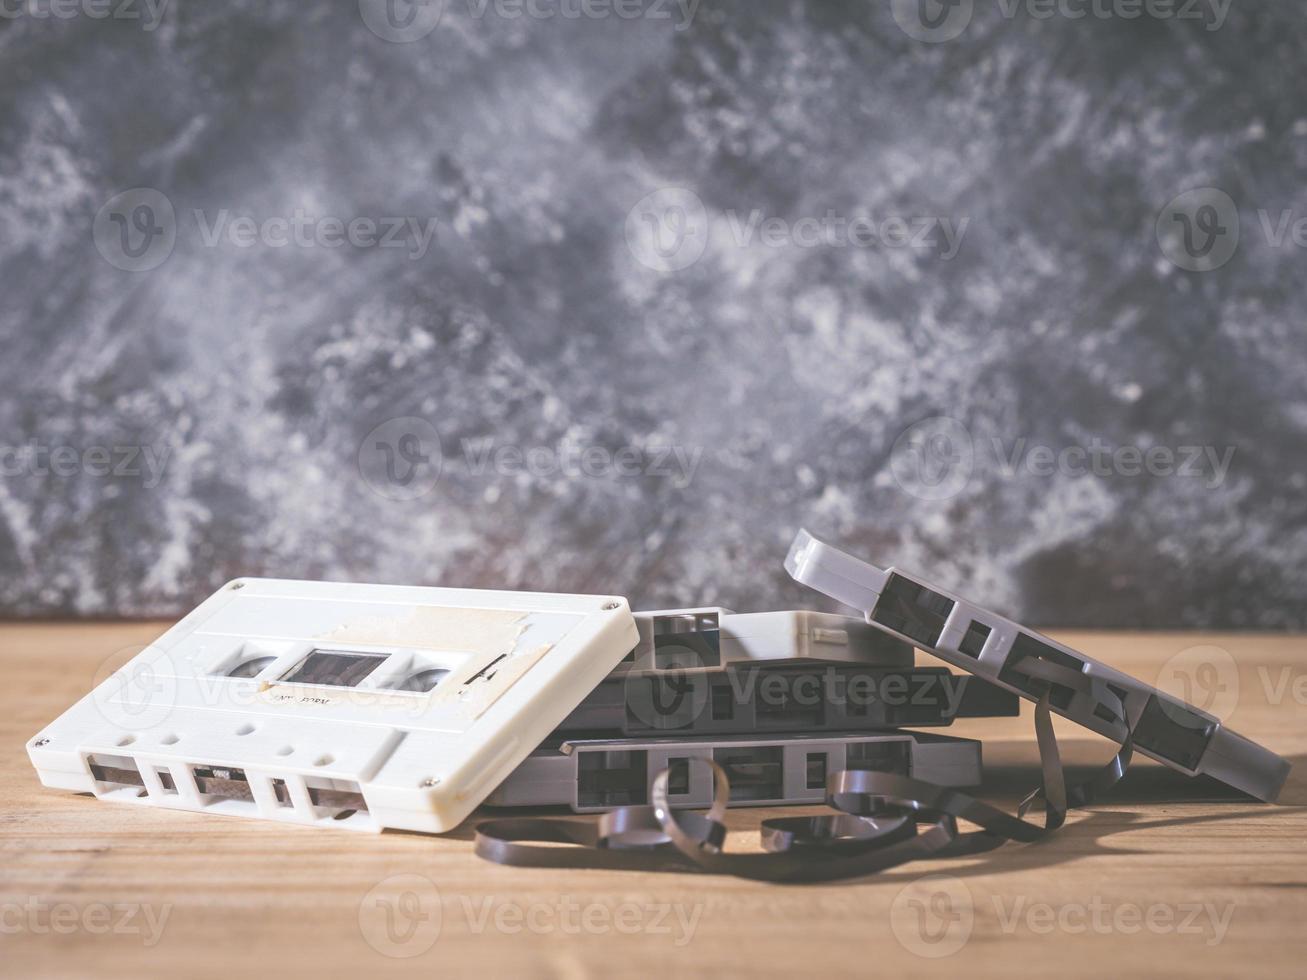 cassettebandjes over houten tafel met grunge background.retro filter. foto